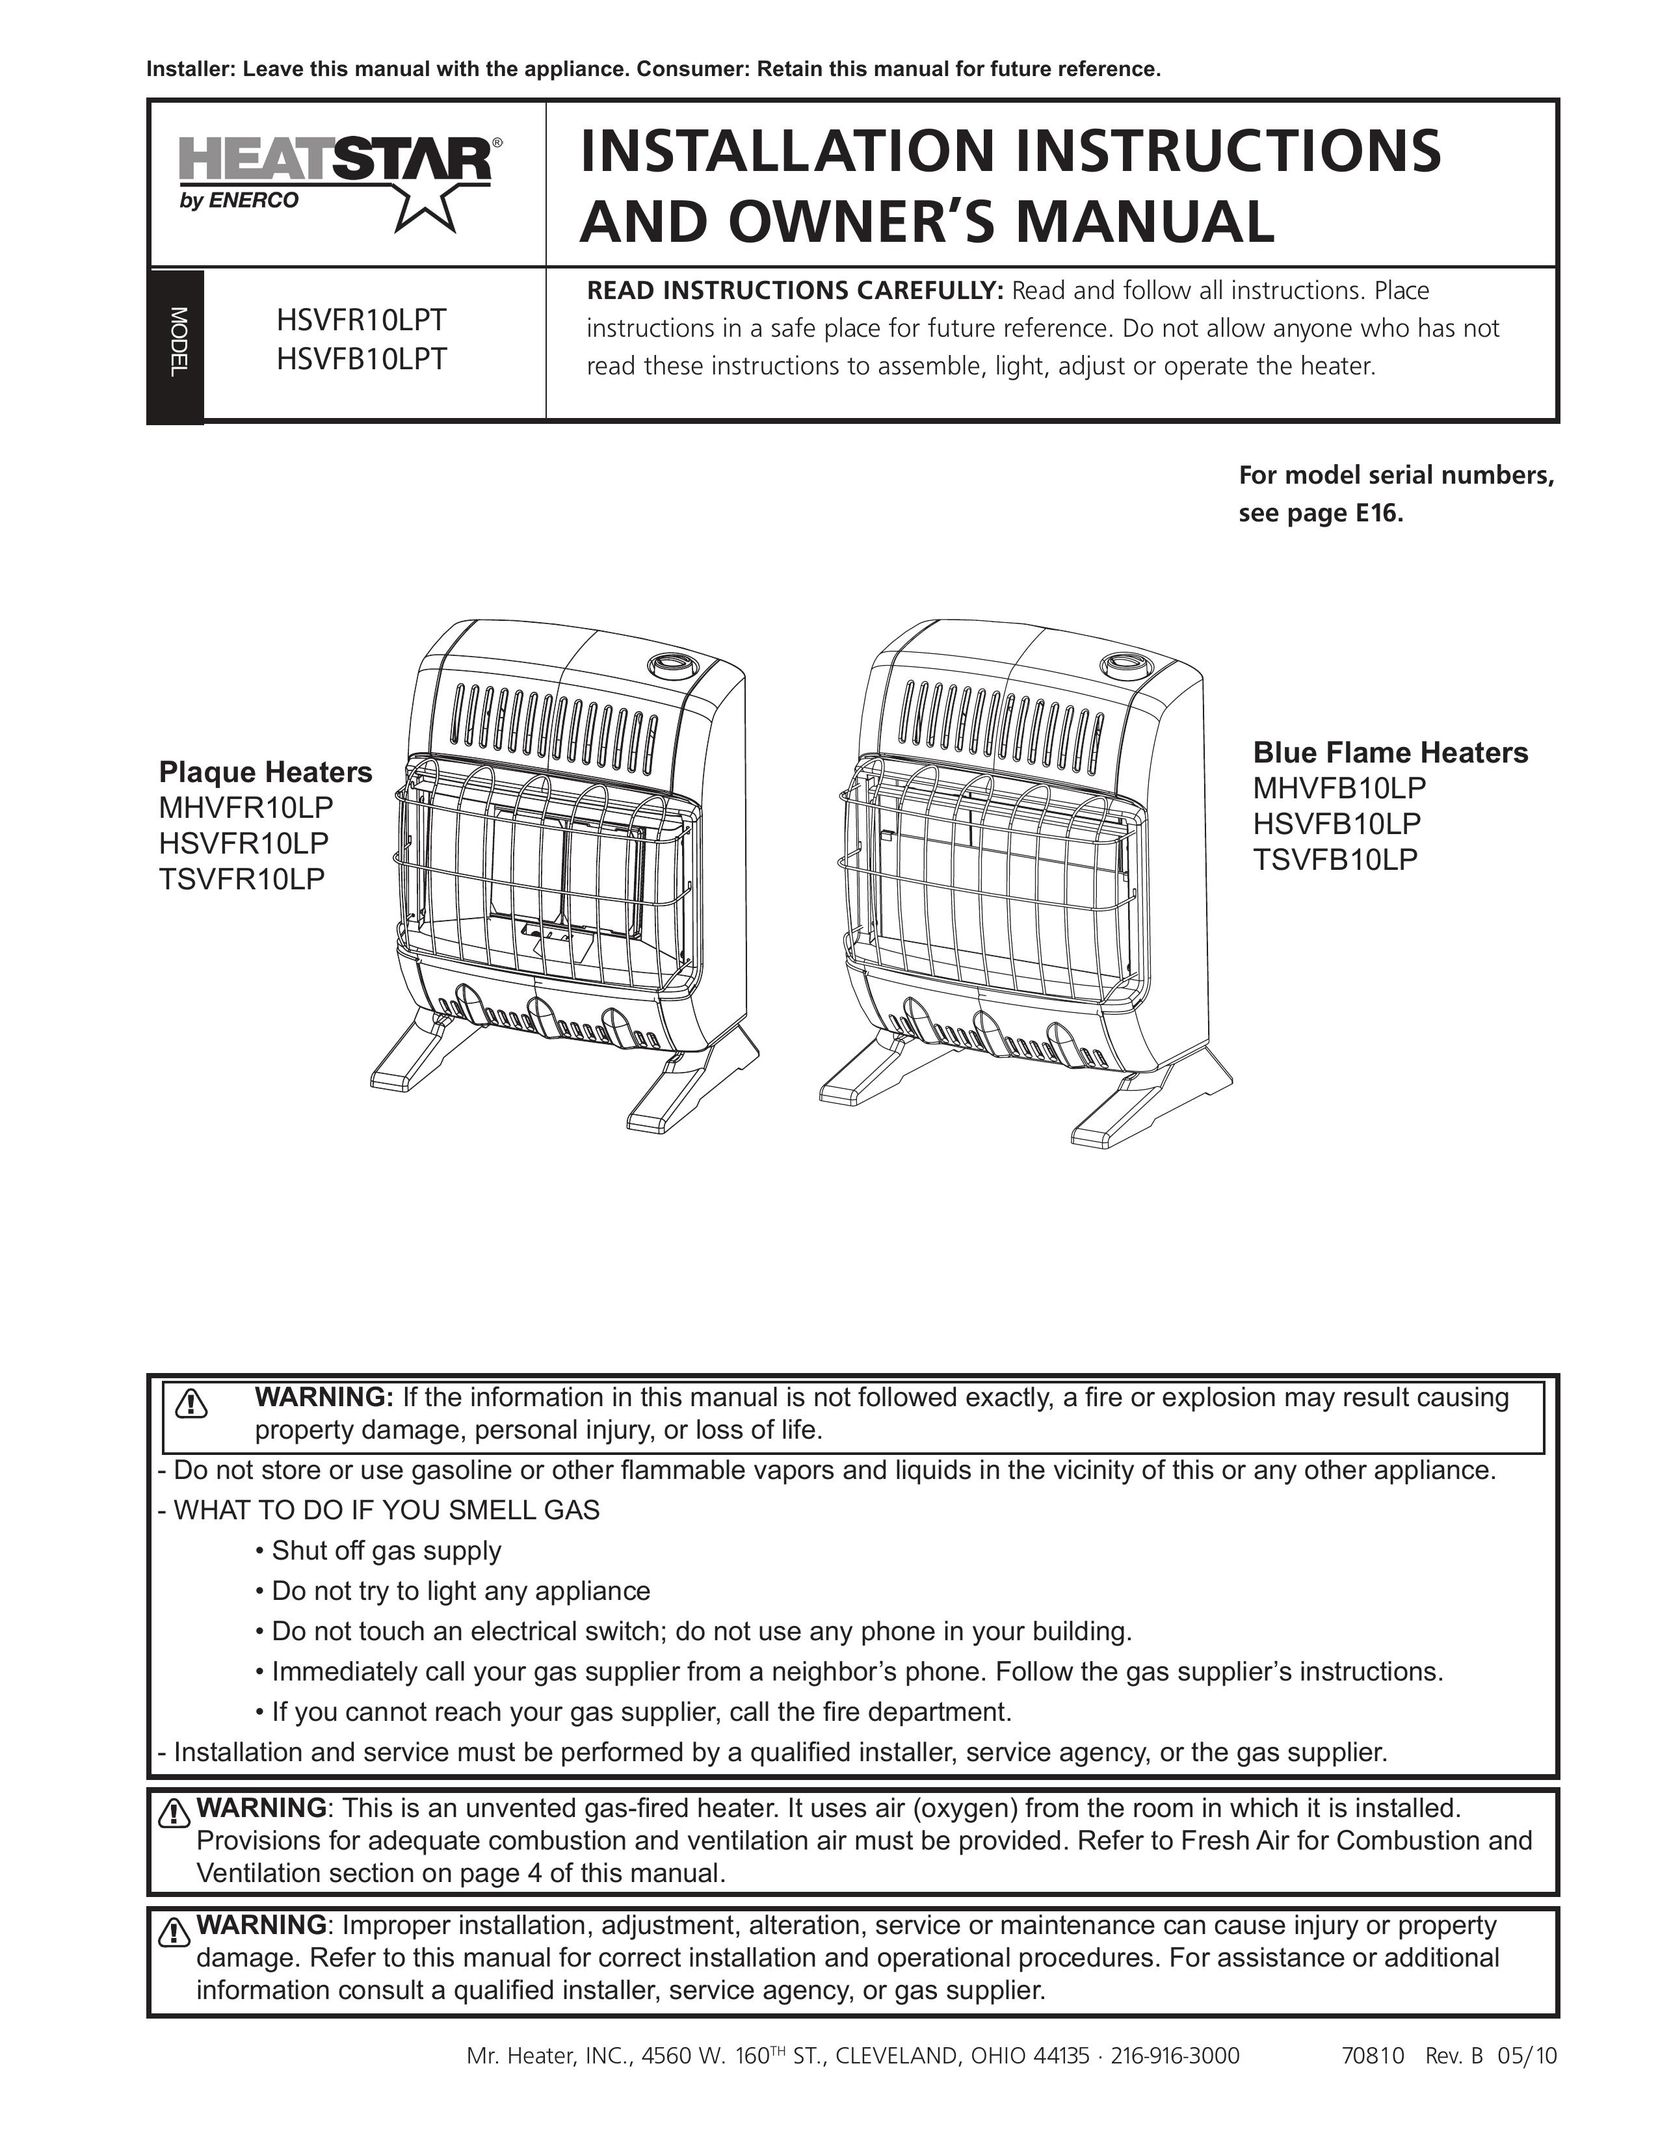 Enerco HSVFB10LP Gas Heater User Manual